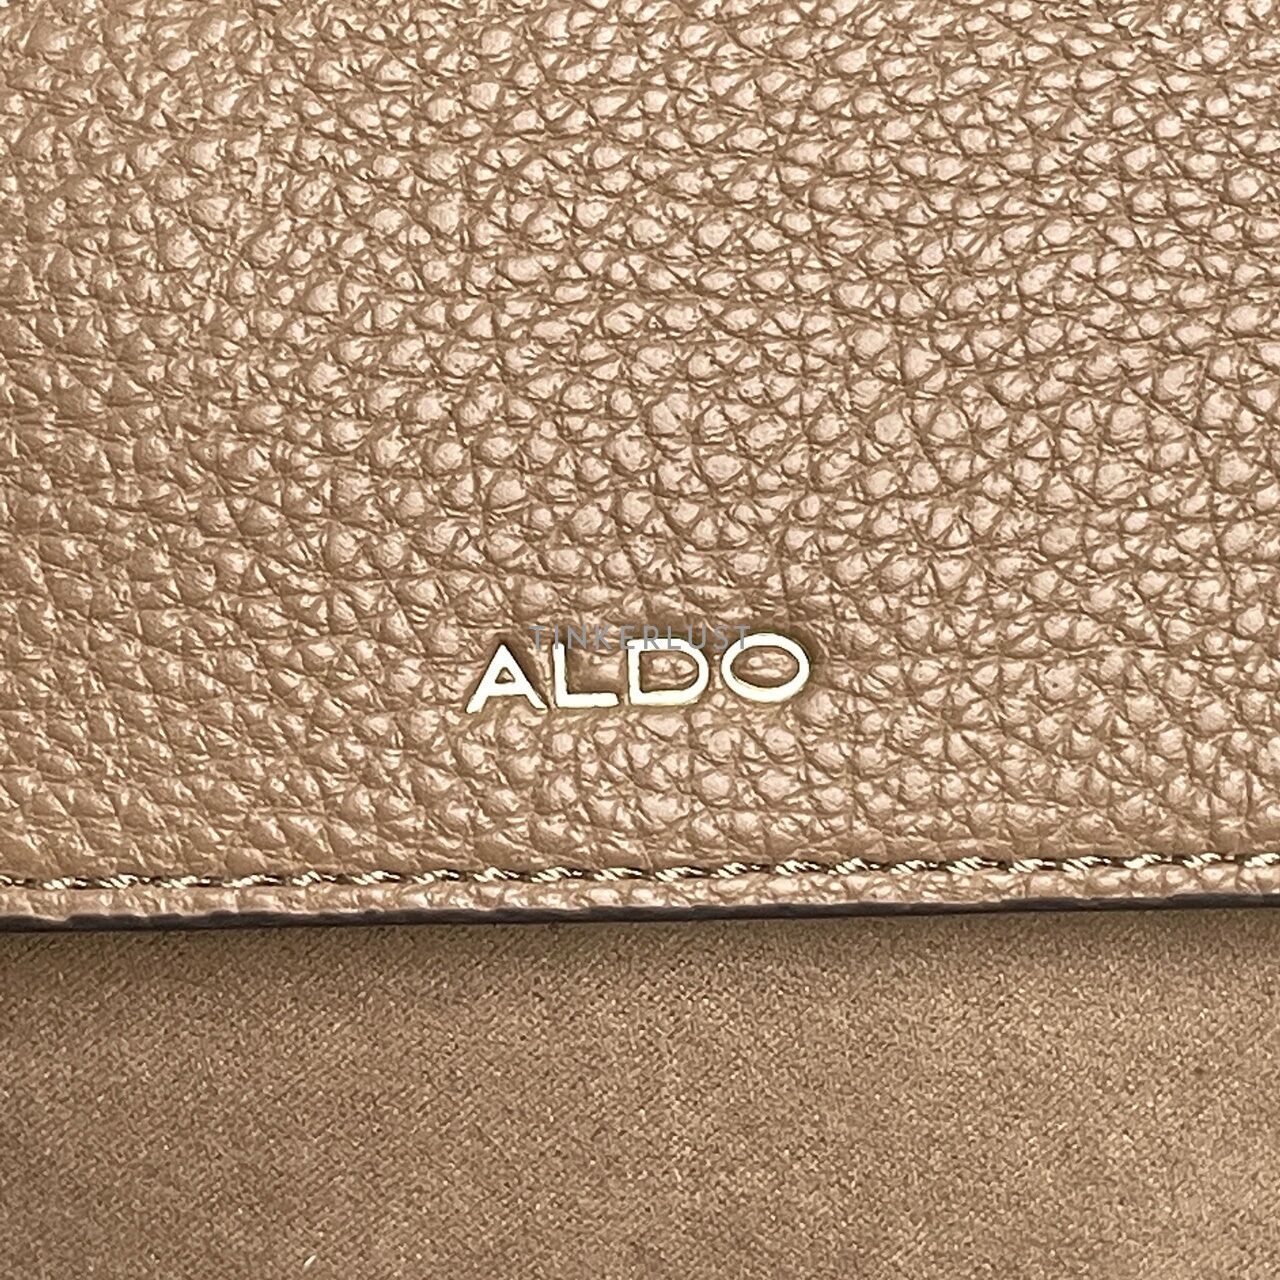 Aldo Light Brown Sling Bag